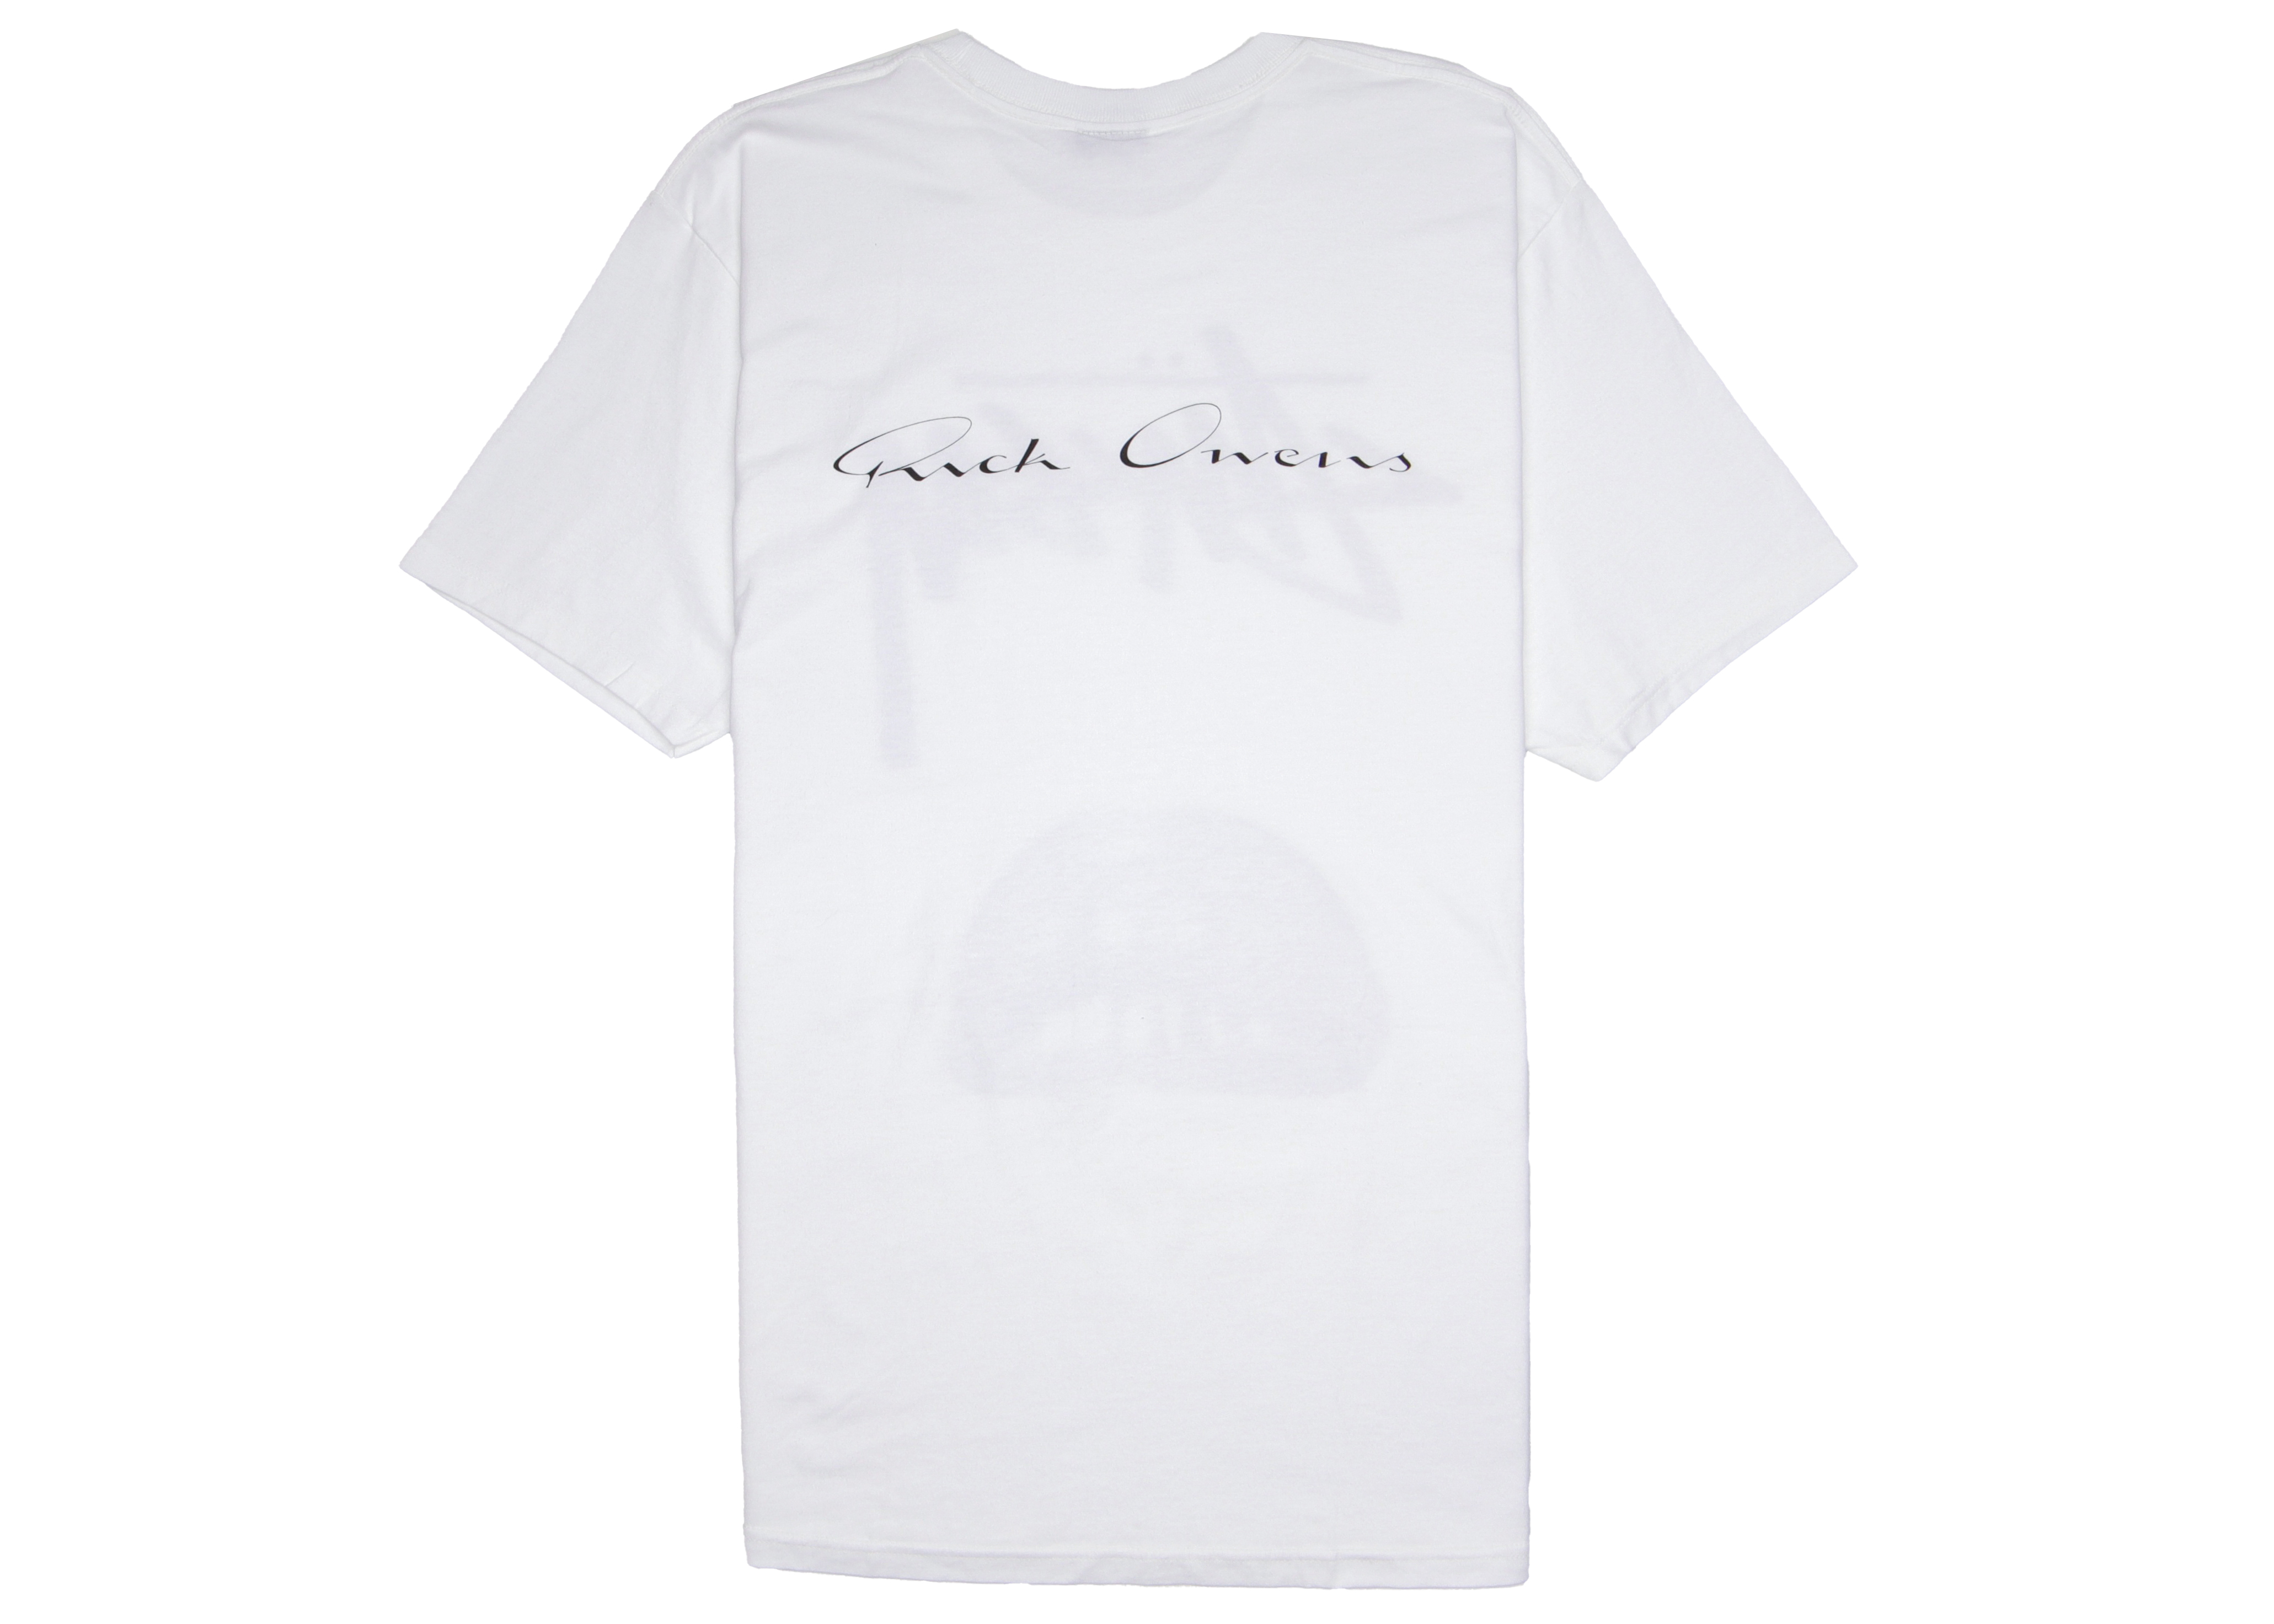 Stussy x Rick Owens World Tour Collection T-Shirt White Men's 